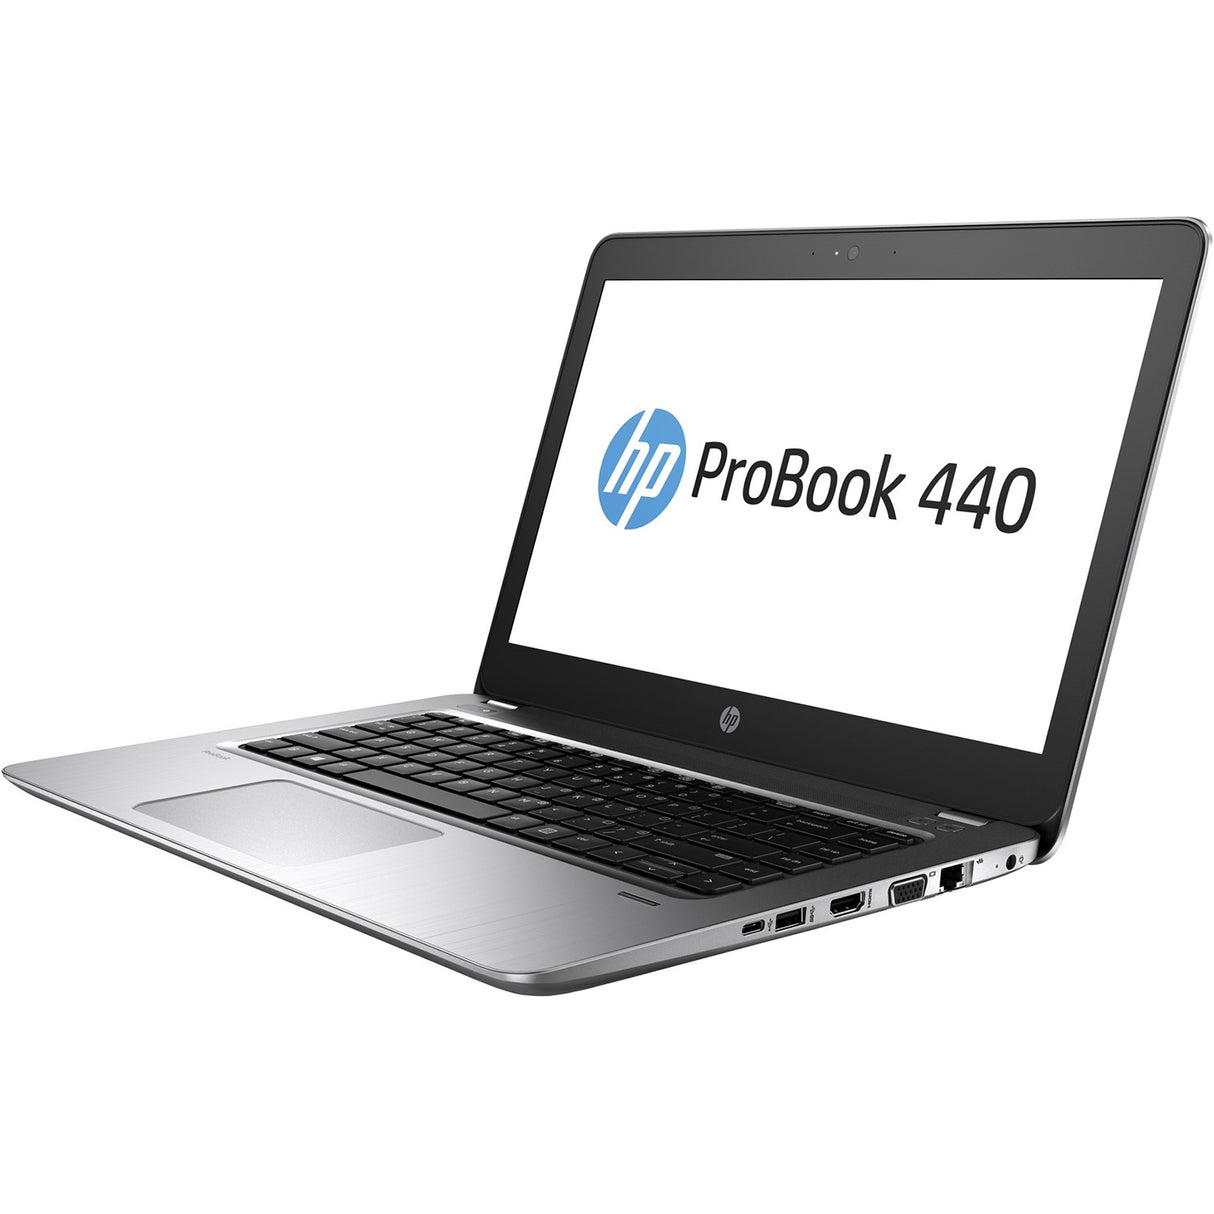 HP ProBook 440 G4 i3 7th Gen 8GB 500GB Windows 10 Home